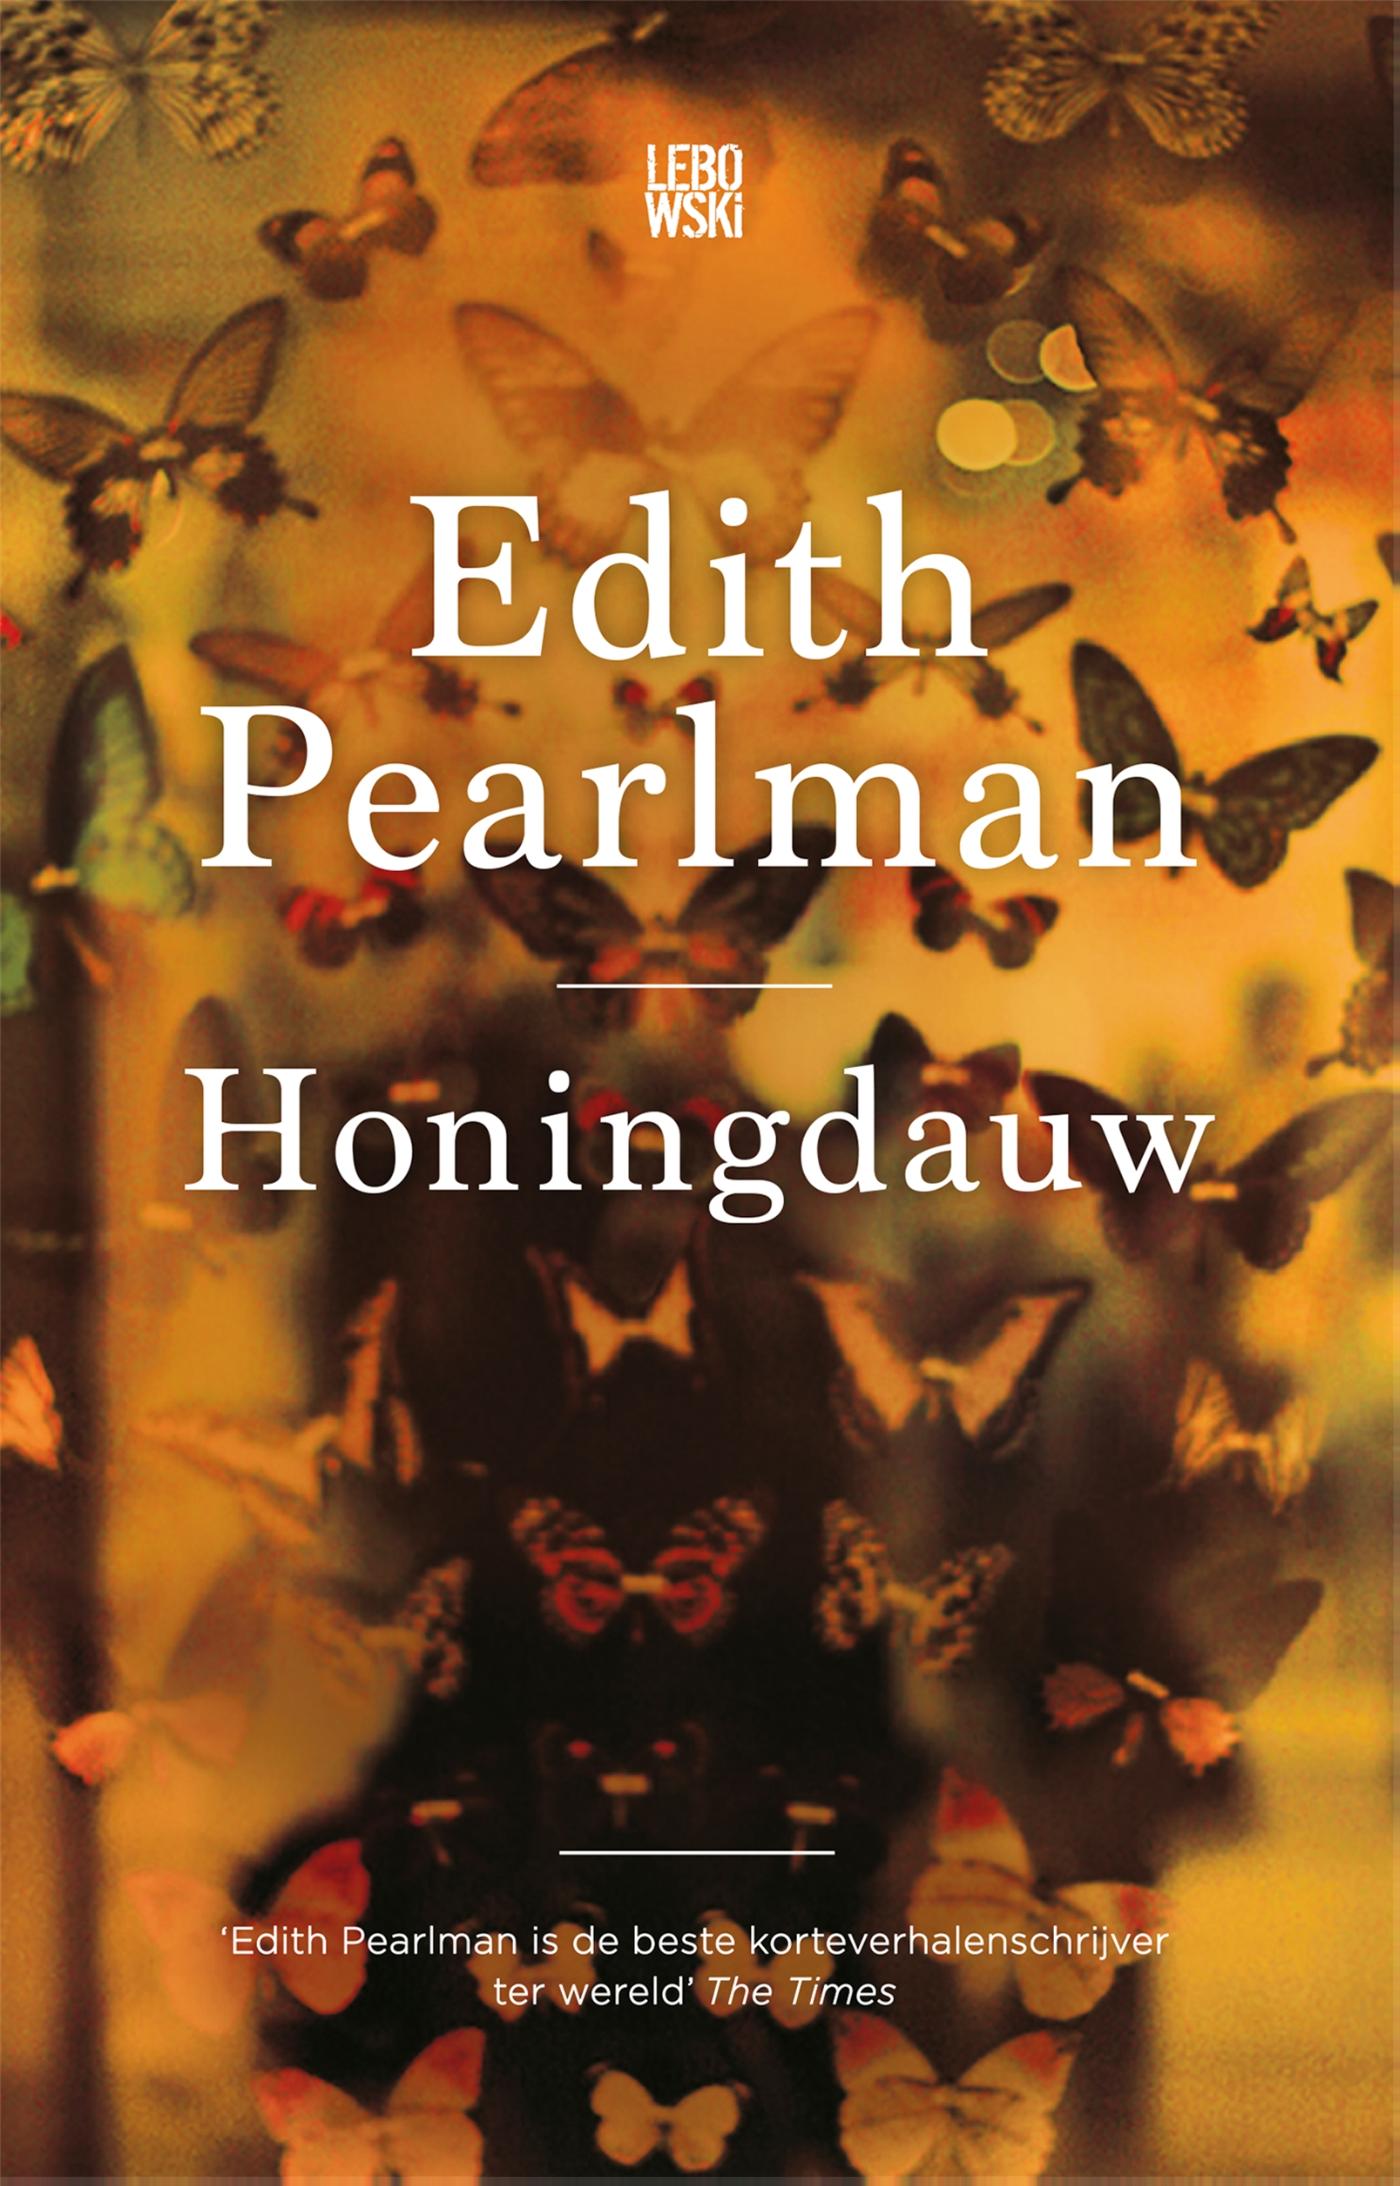 Honingdauw (Ebook)